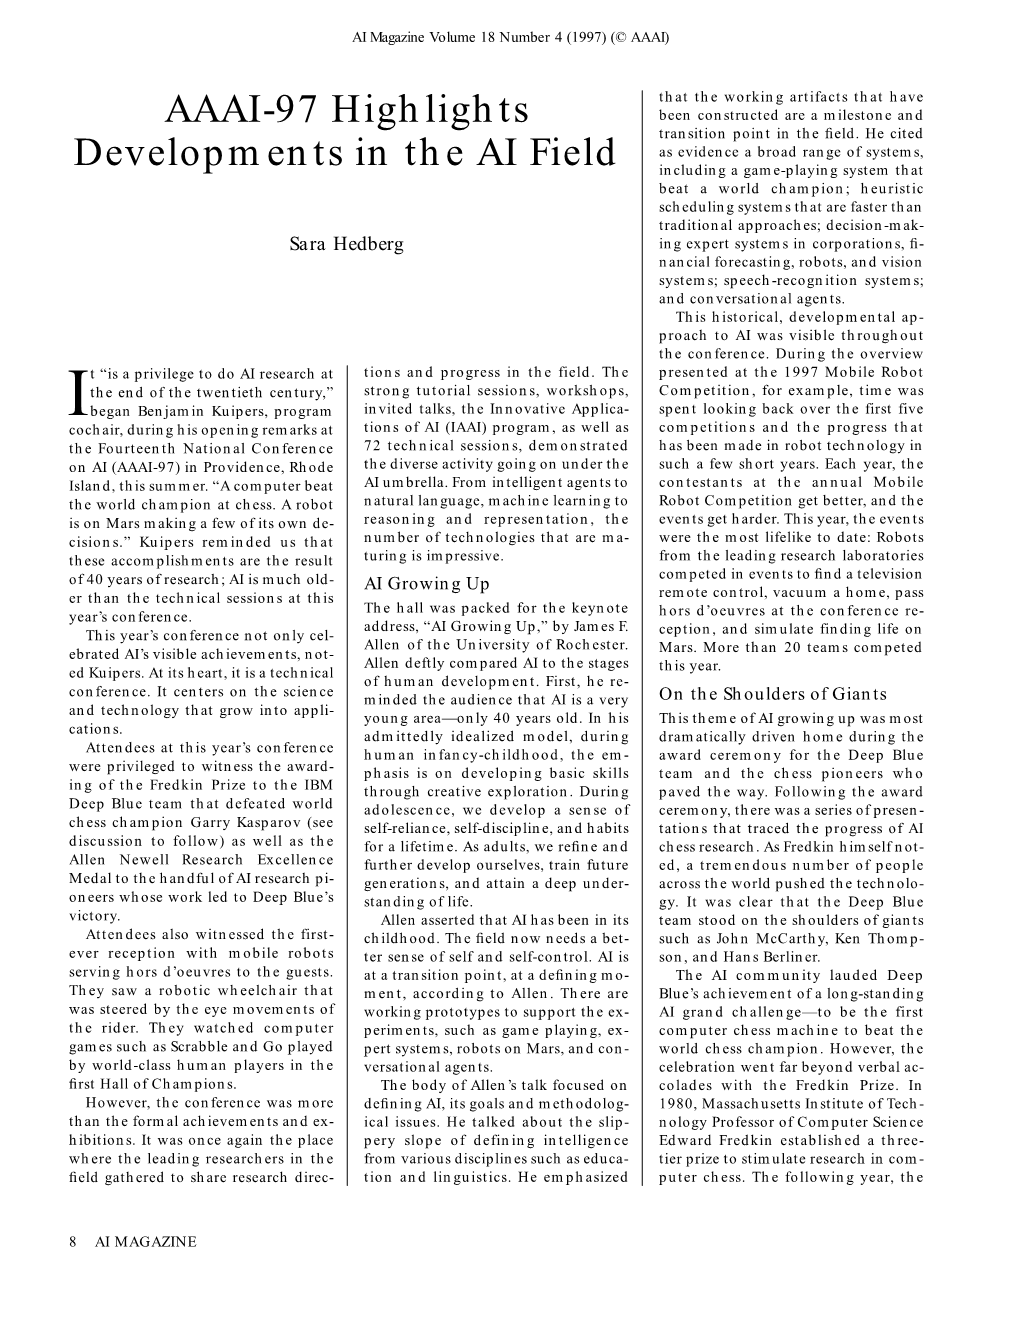 AAAI-97 Highlights Developments in the AI Field